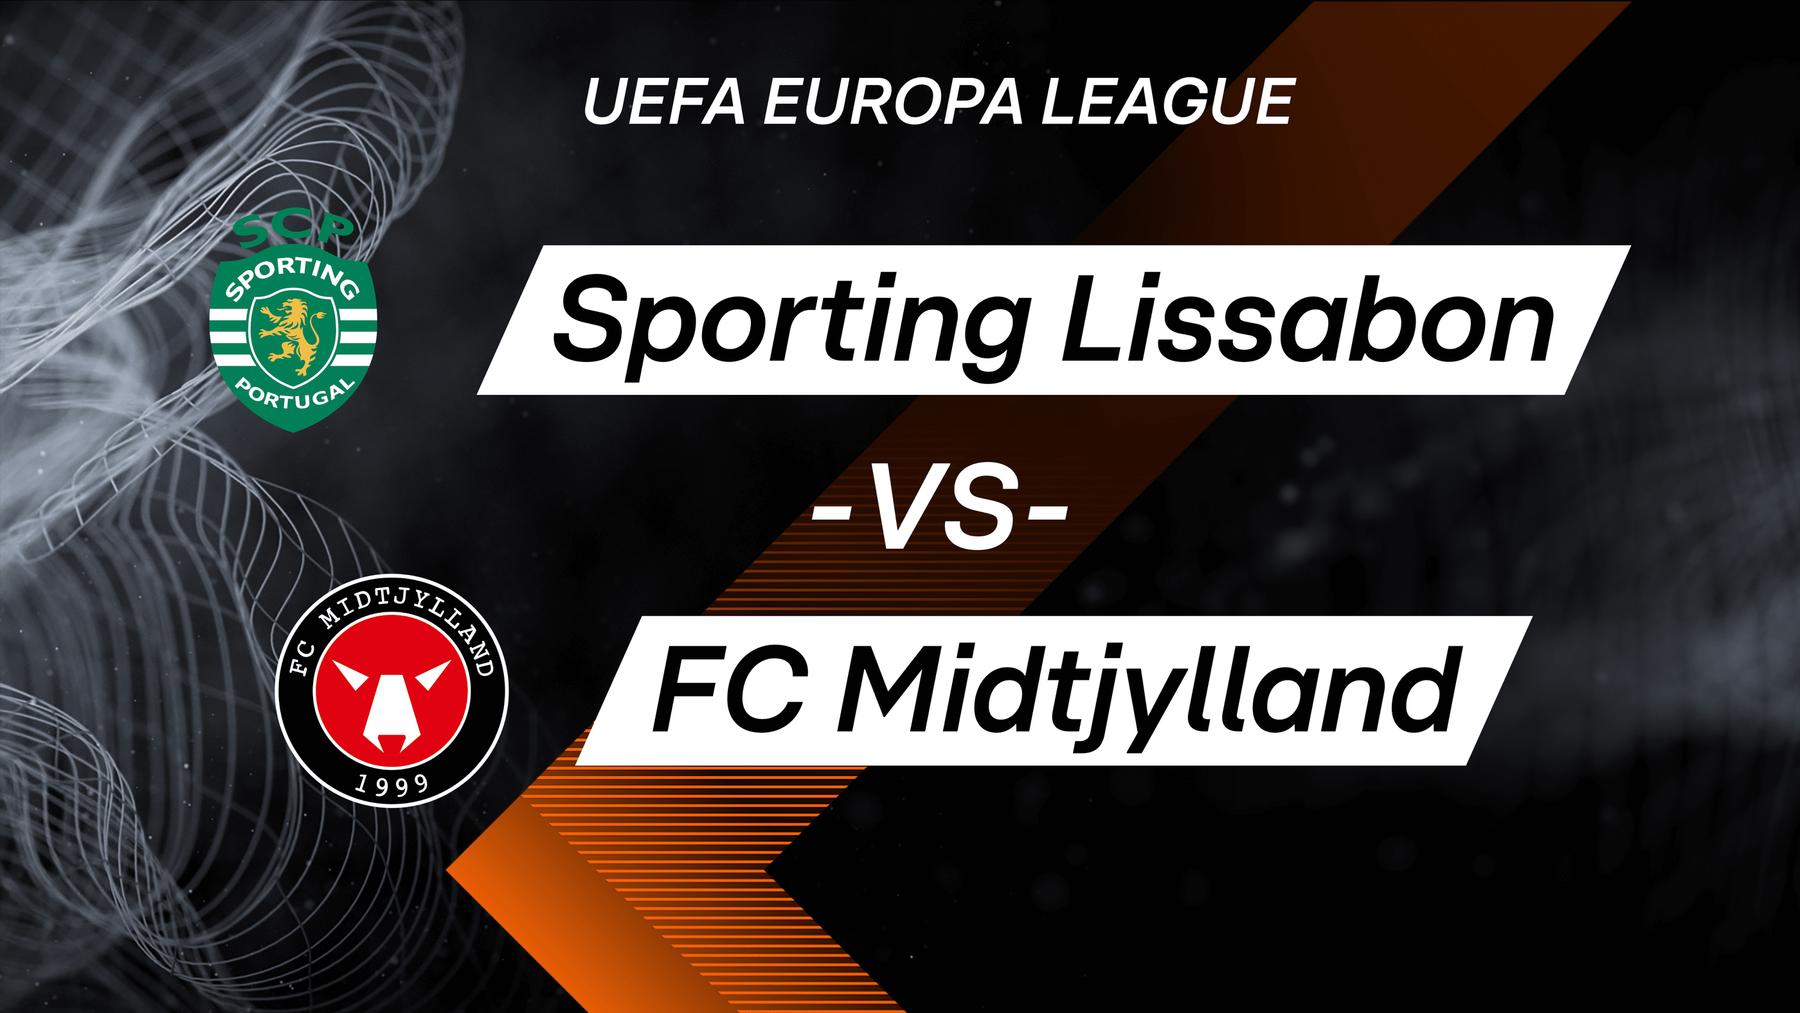 Sporting Lissabon vs. FC Midtjylland